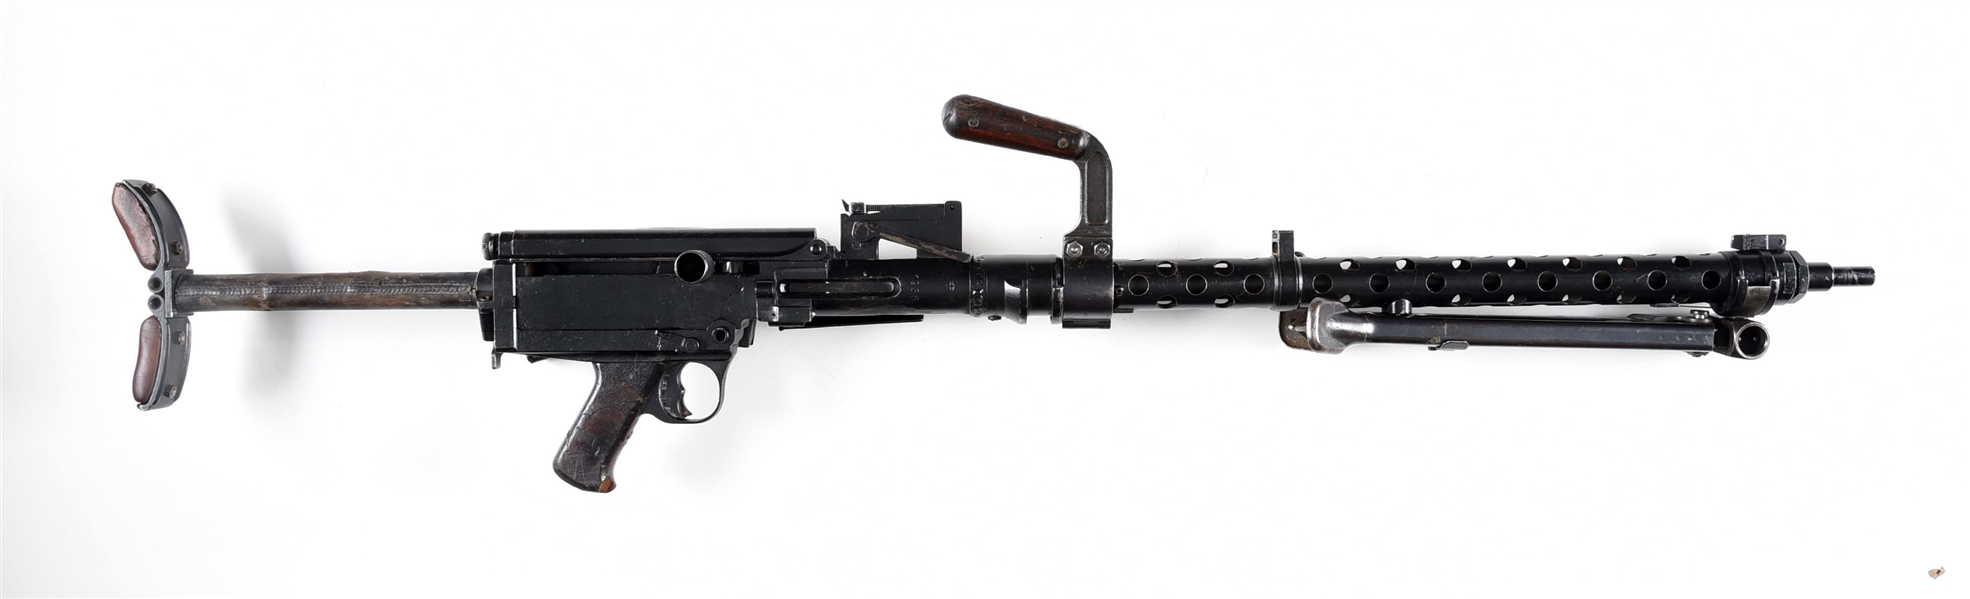 PORTUGUESE CONTRACT MG-13 DISPLAY MACHINE GUN.